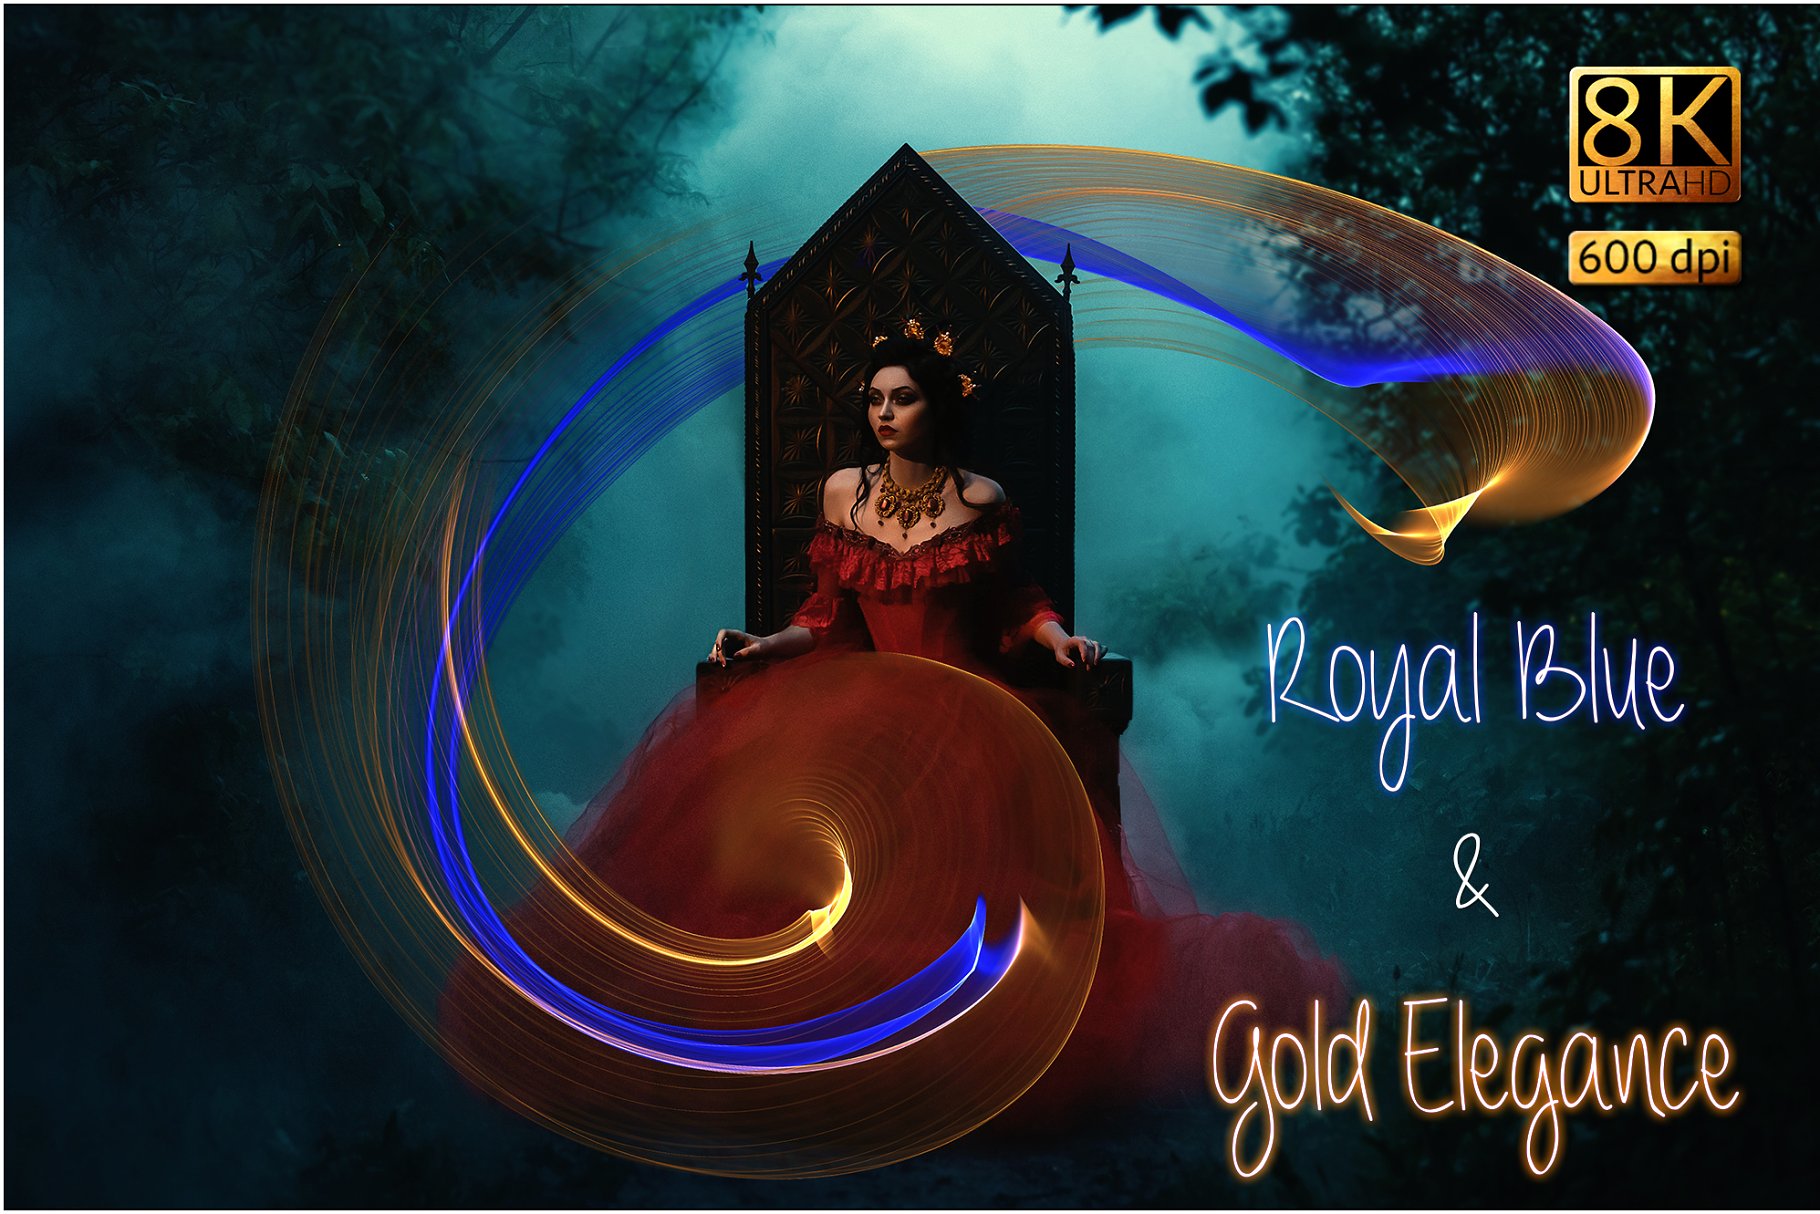 8K高分辨率皇家蓝&典雅金奇幻光线叠层背景 Royal Blue & Gold Elegance插图